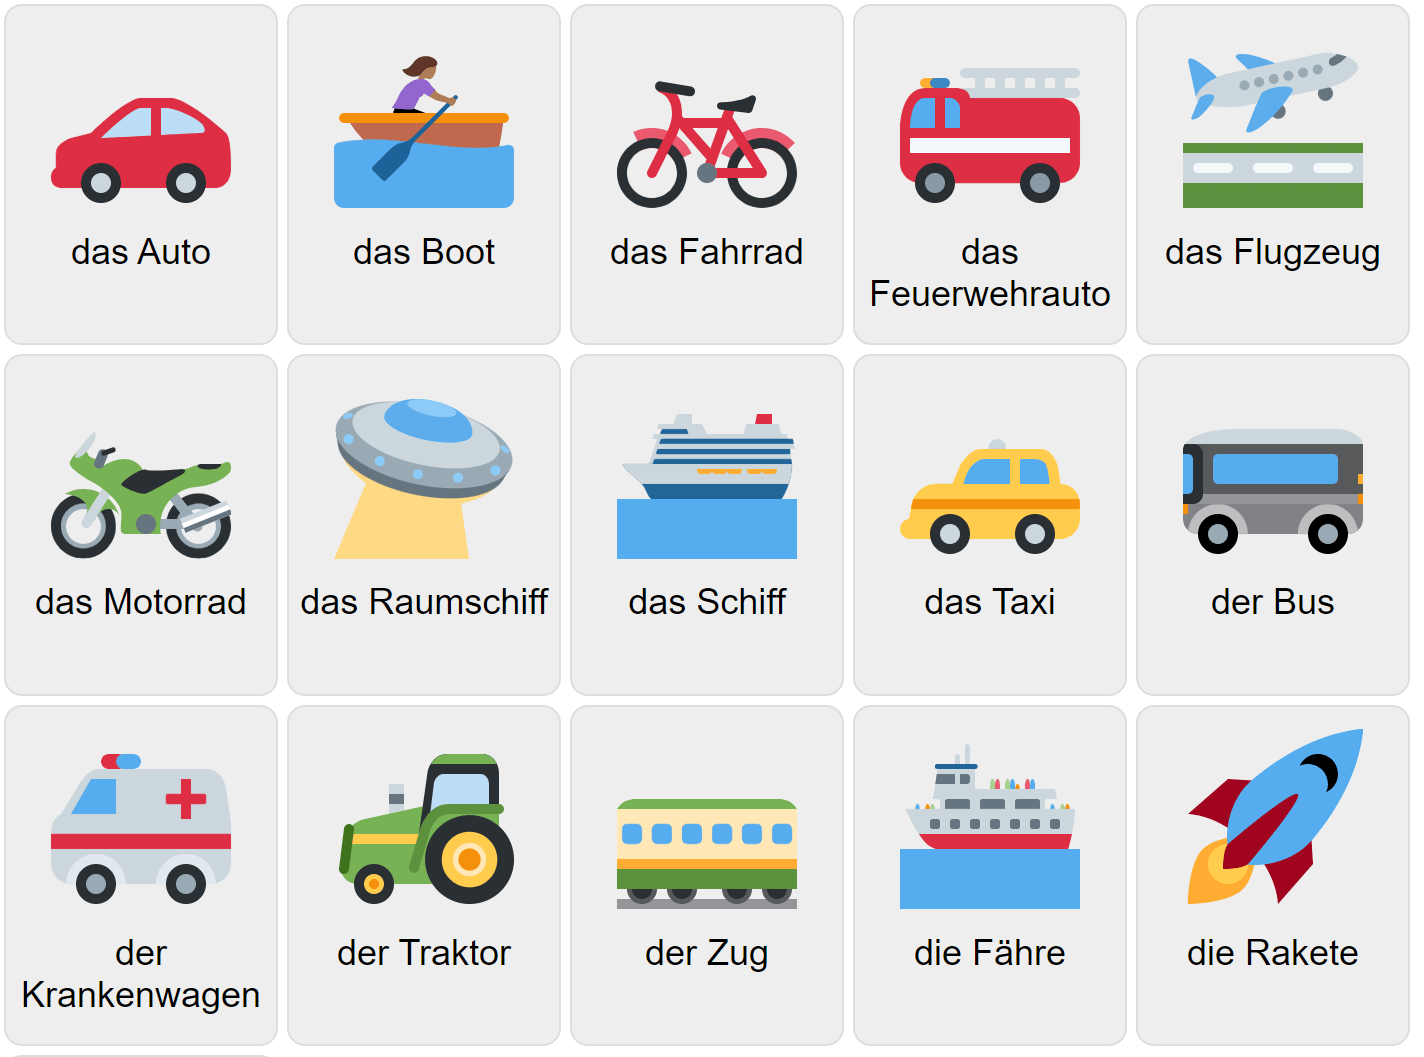 Transport in German